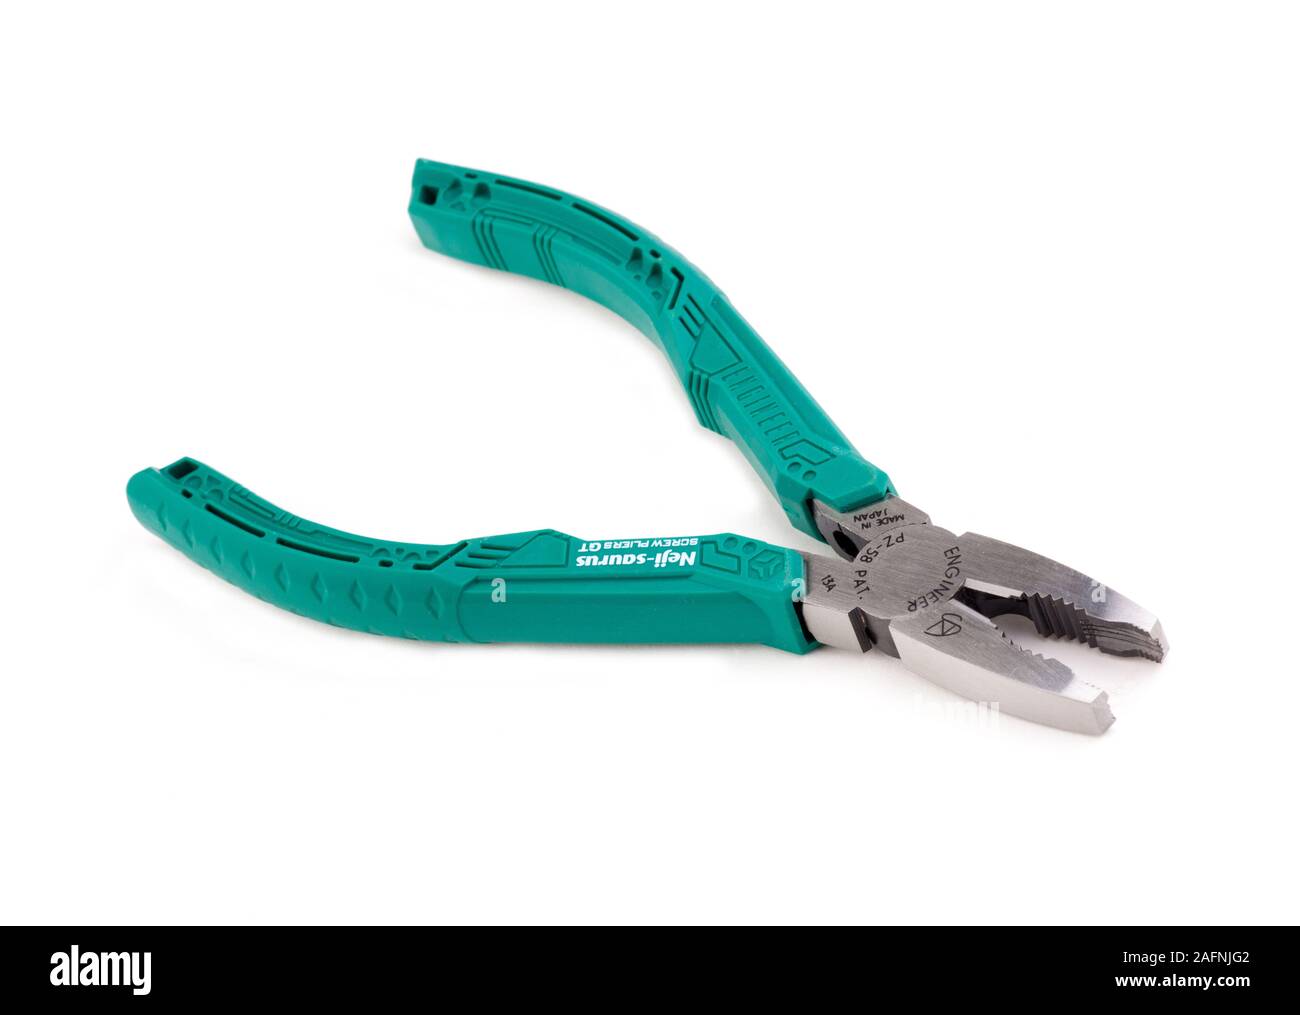 Pliers hand tool Stock Photo